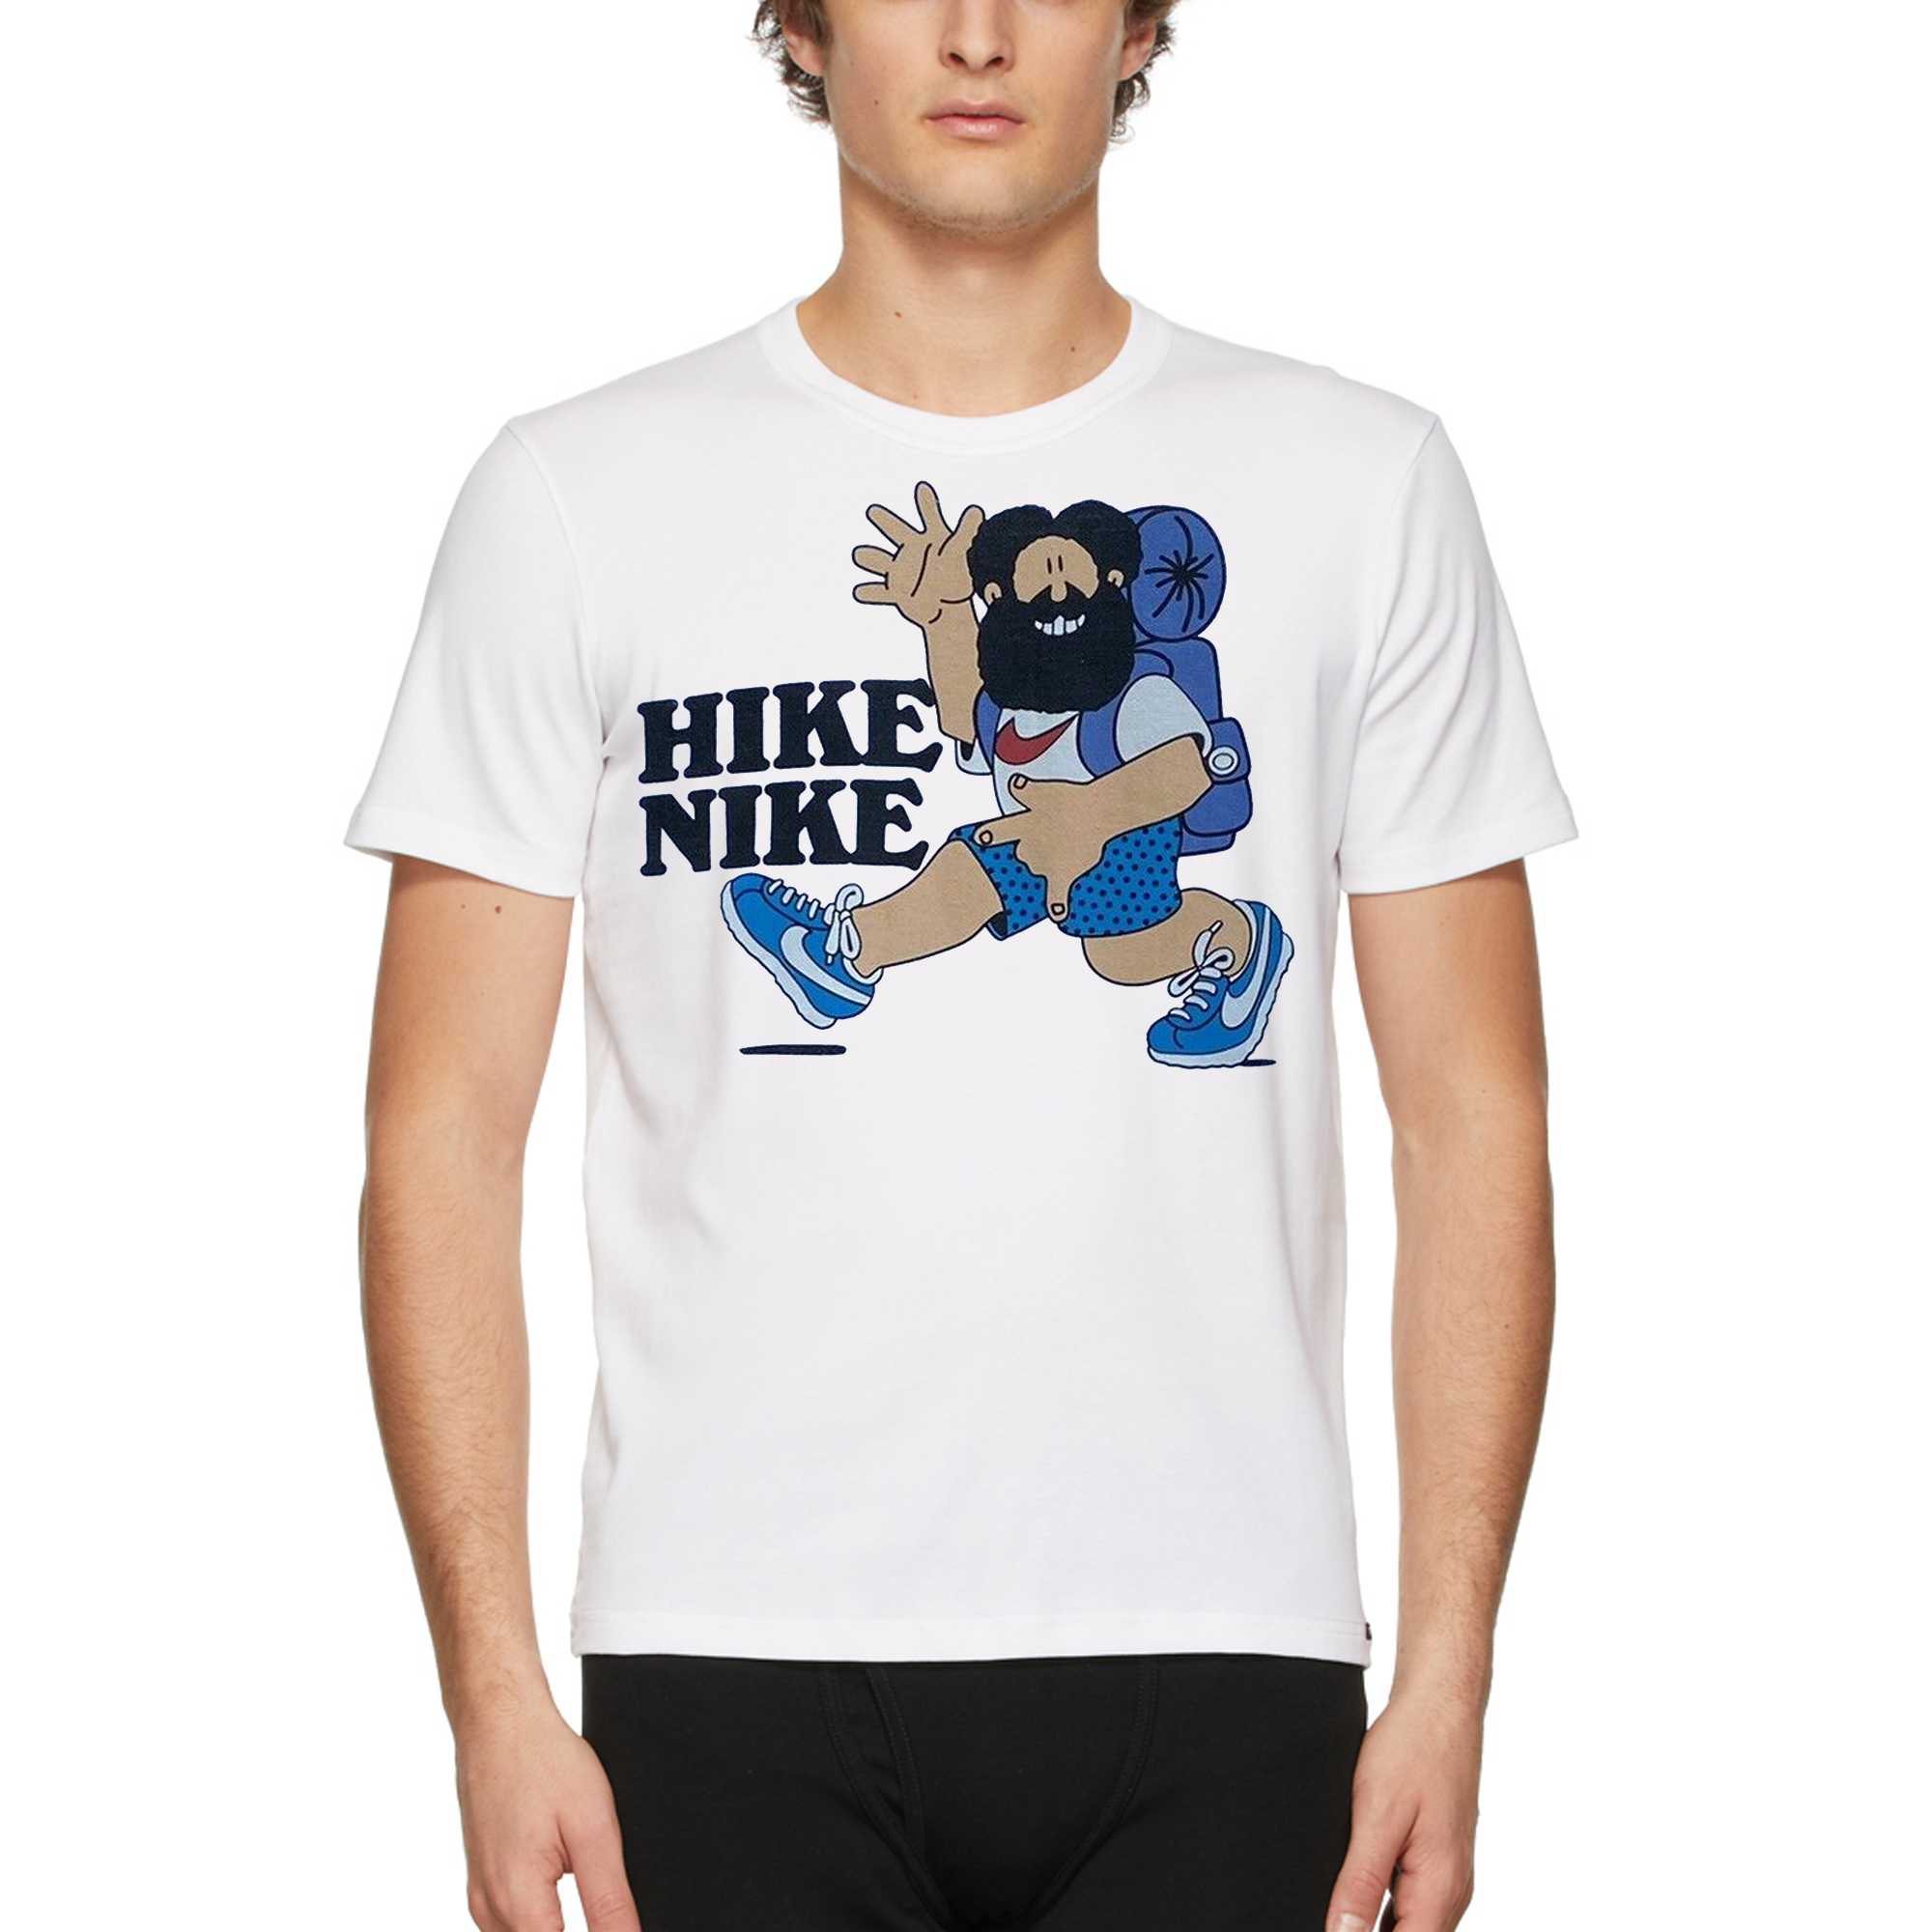 Hike Nike 80s Vintage T-shirt - Clothing